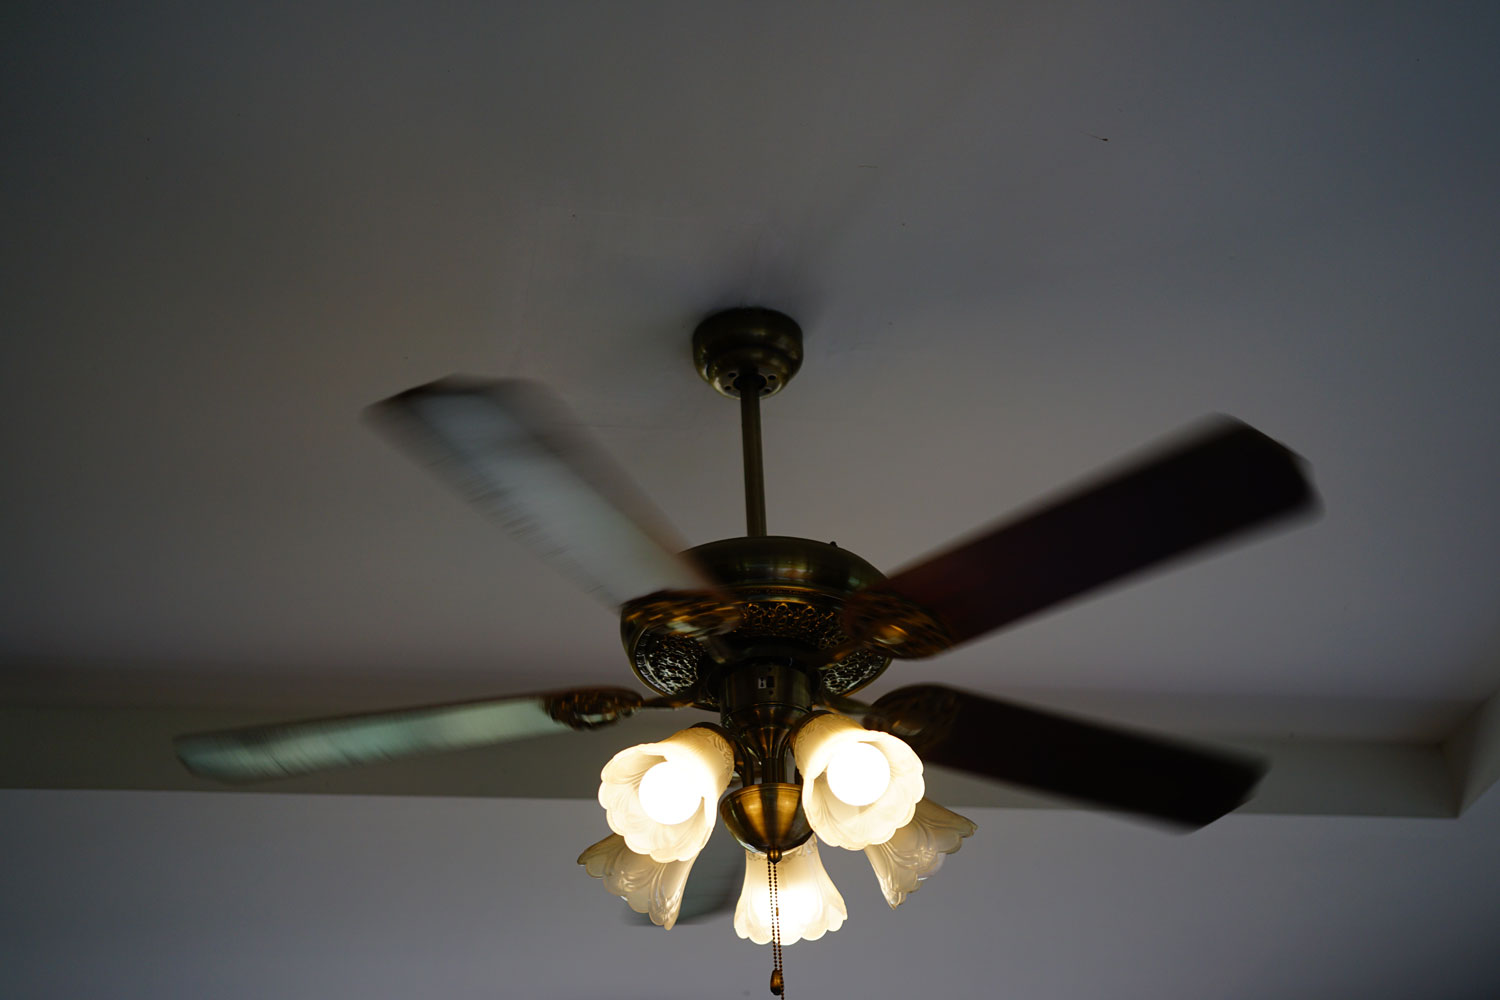 Ceiling fan lights turned on inside the living room